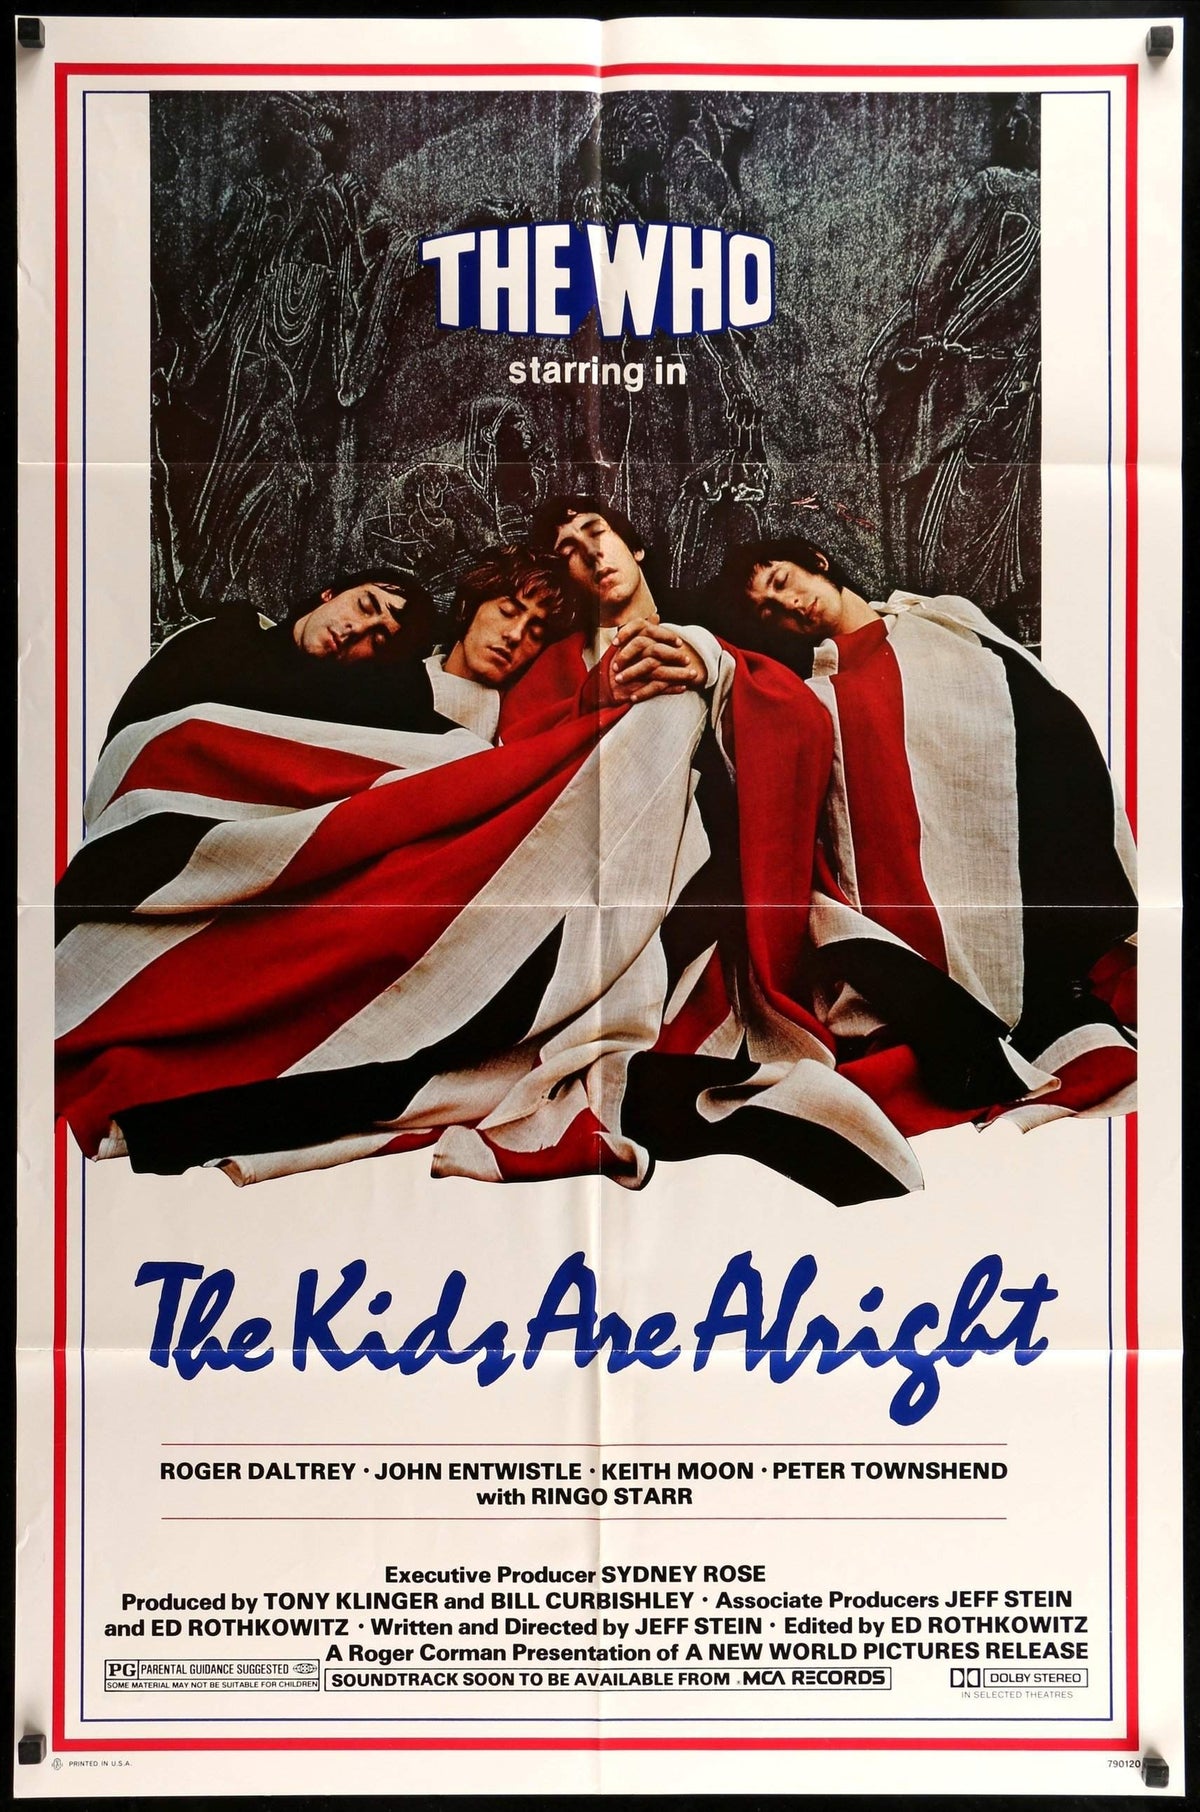 Kids Are Alright (1979) original movie poster for sale at Original Film Art